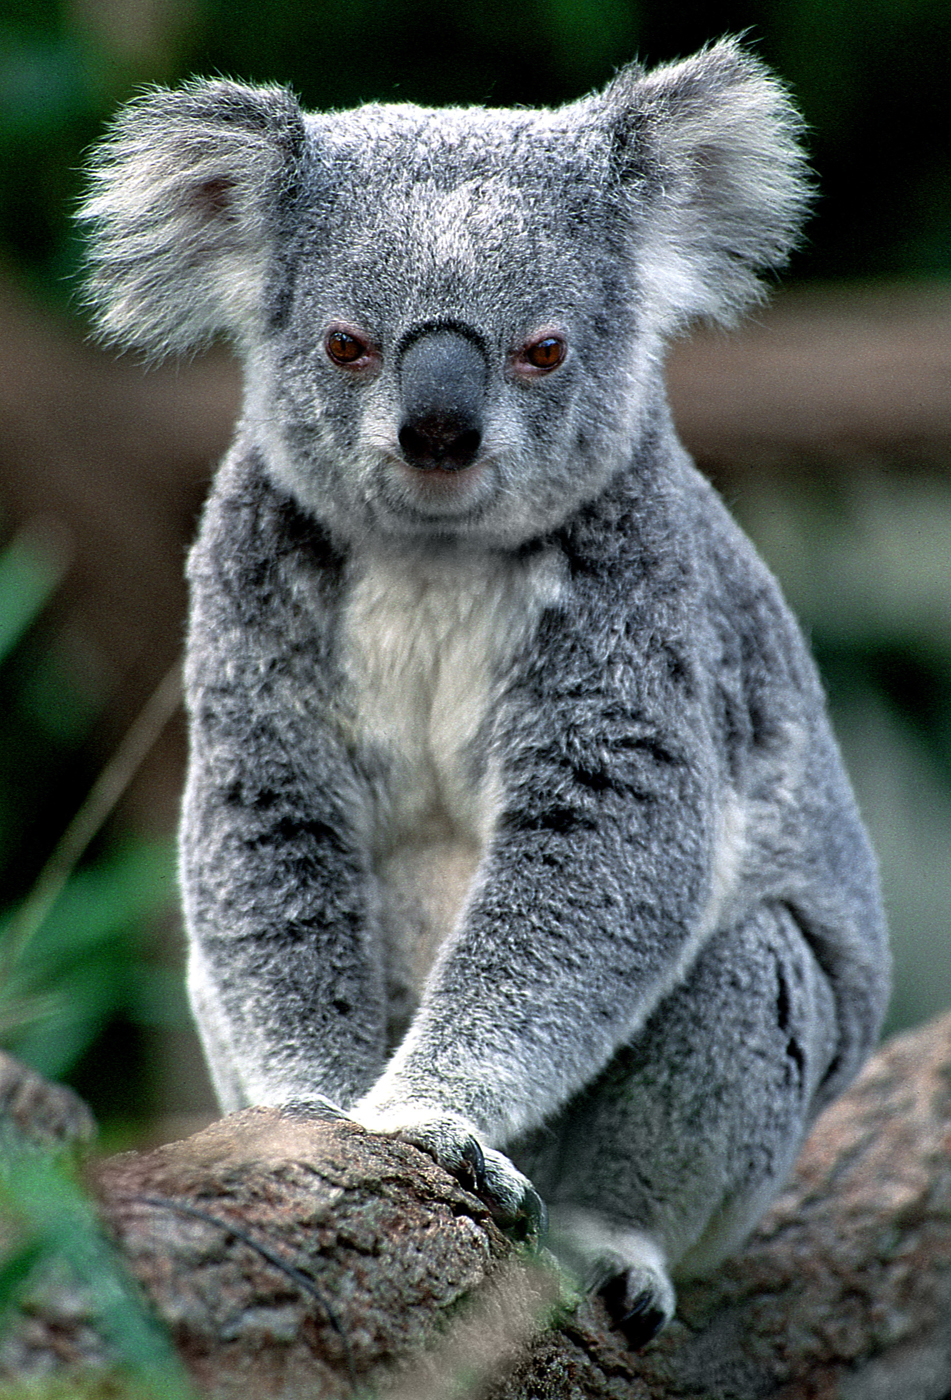 Koala health research at Griffith University